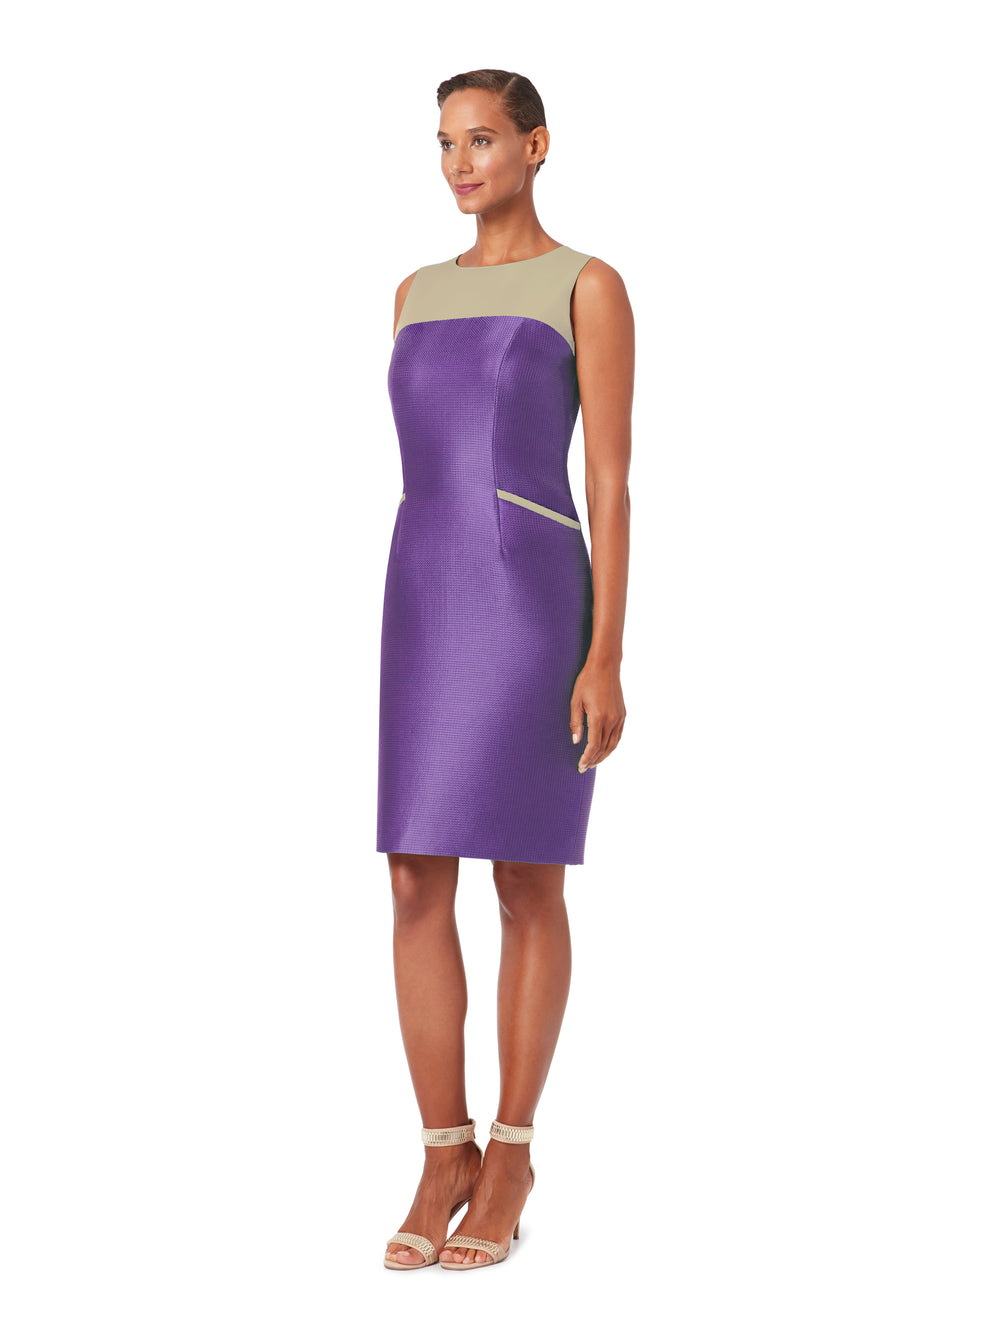 D072 _ STAR _ Scoop-Neck Cocktail Dress _ Prism Purple